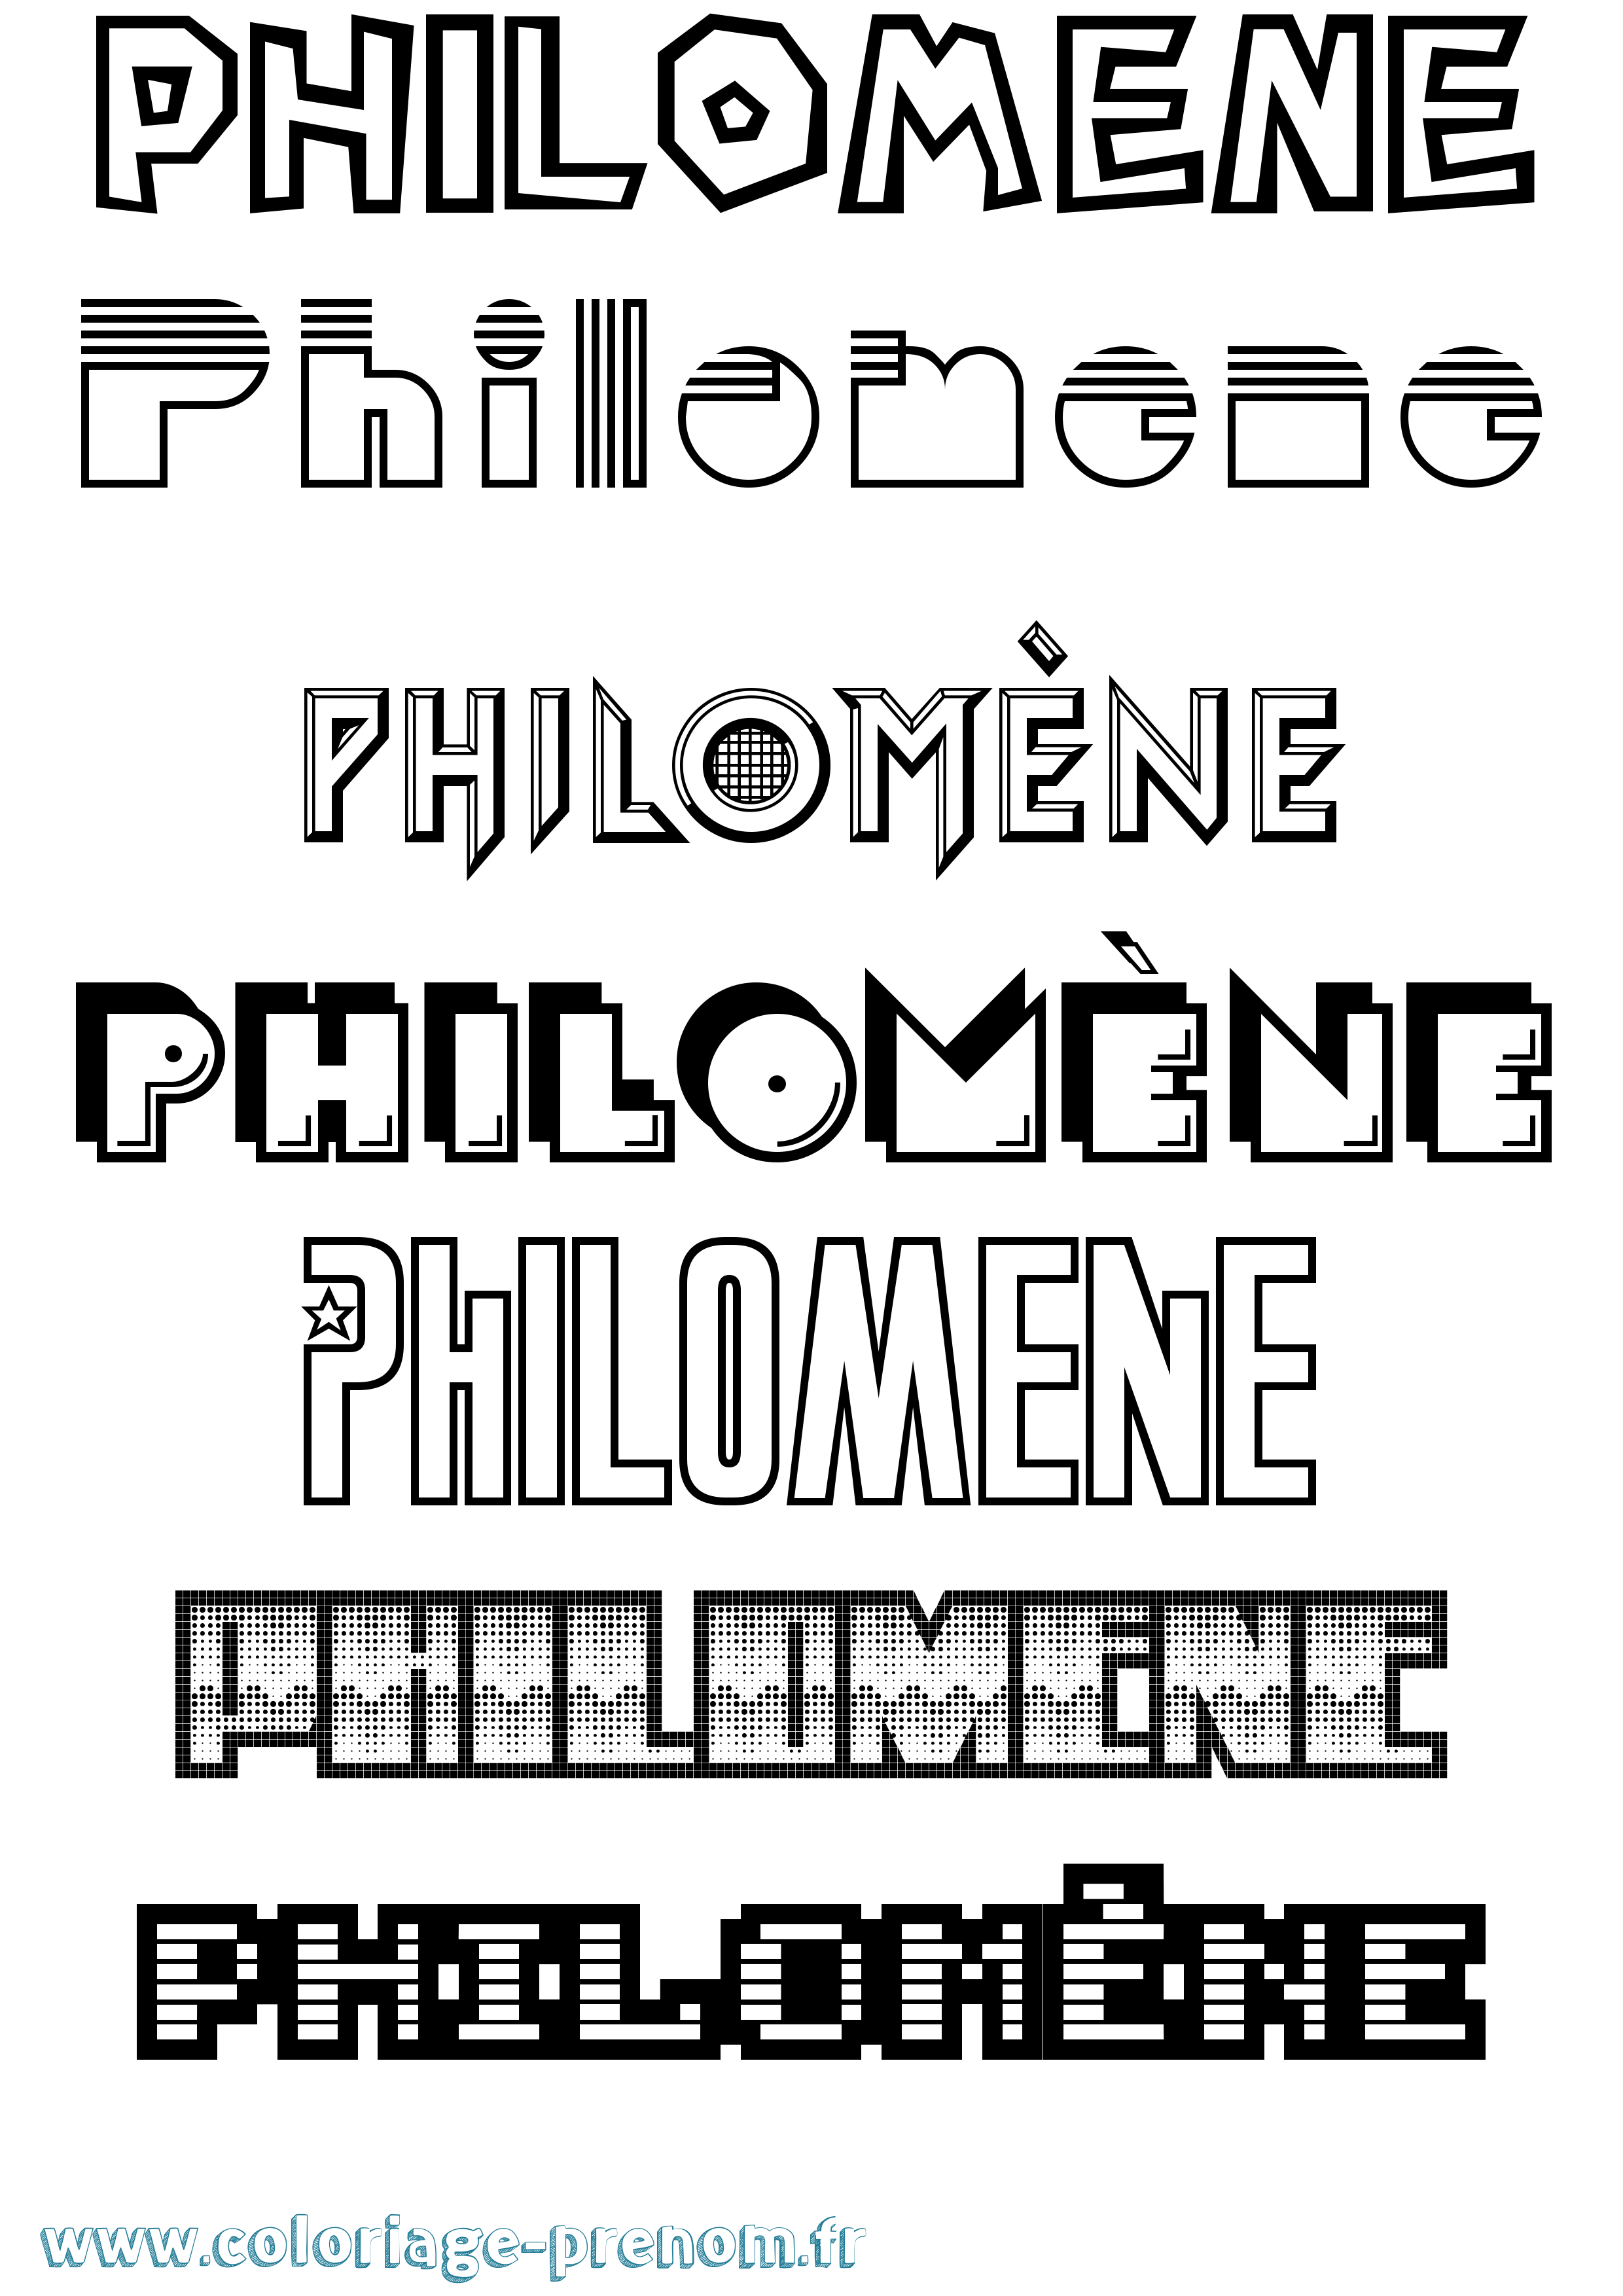 Coloriage prénom Philomène